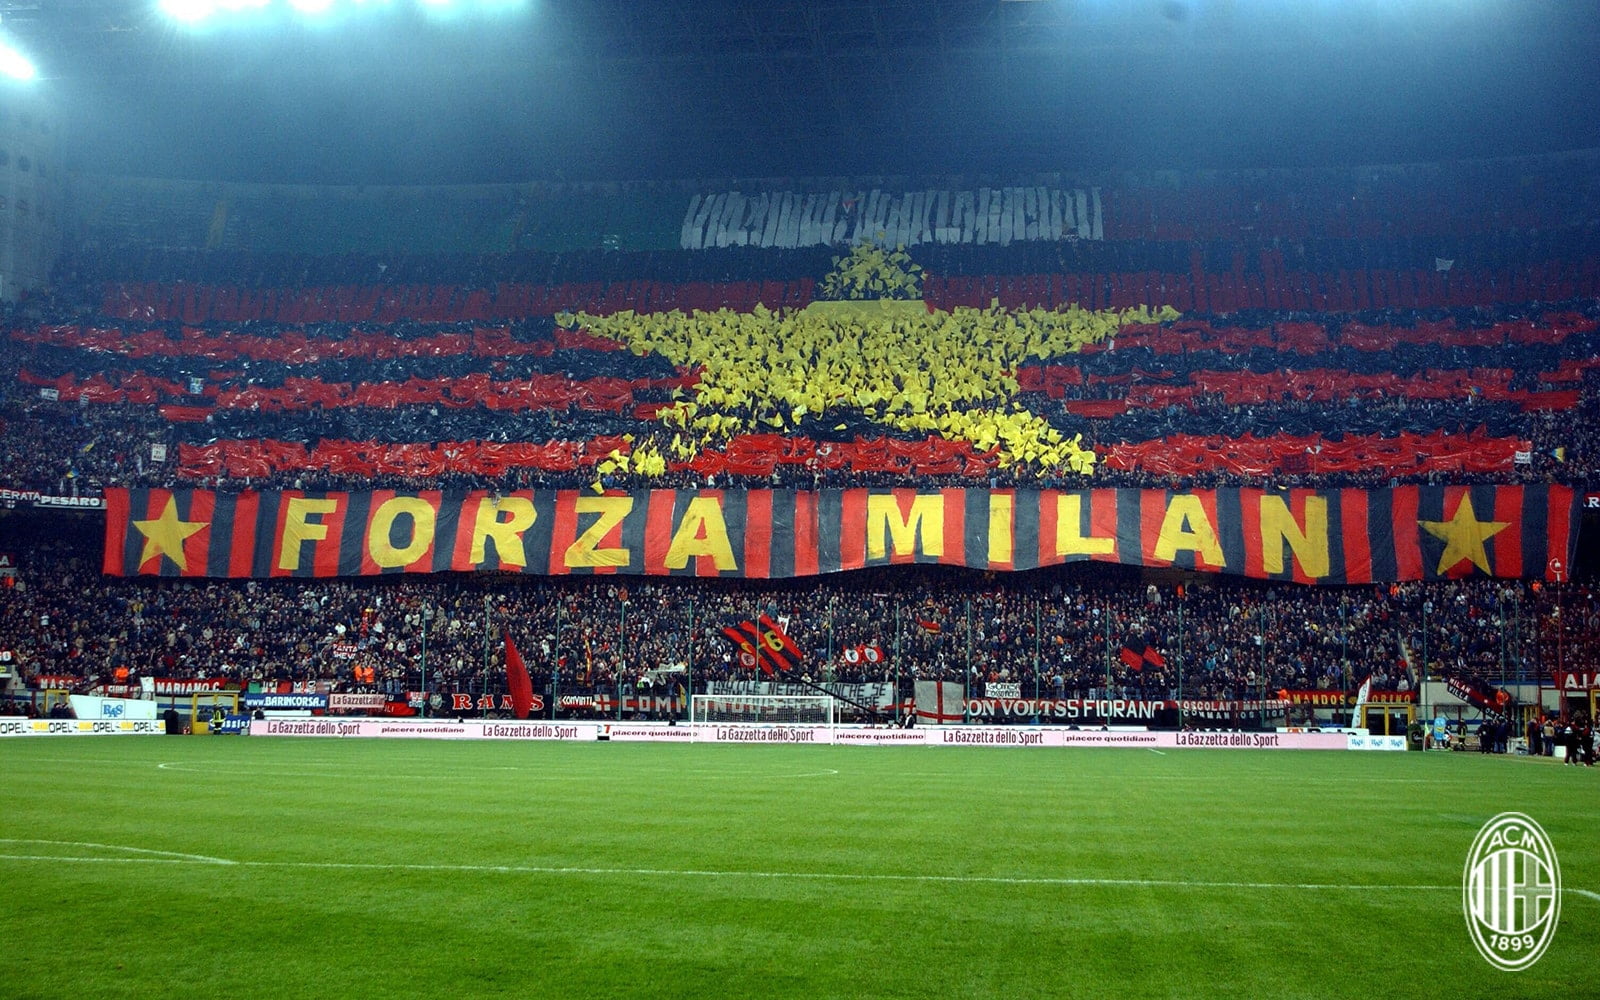 AC Milan - US Lecce, 7 aprilom 18:00